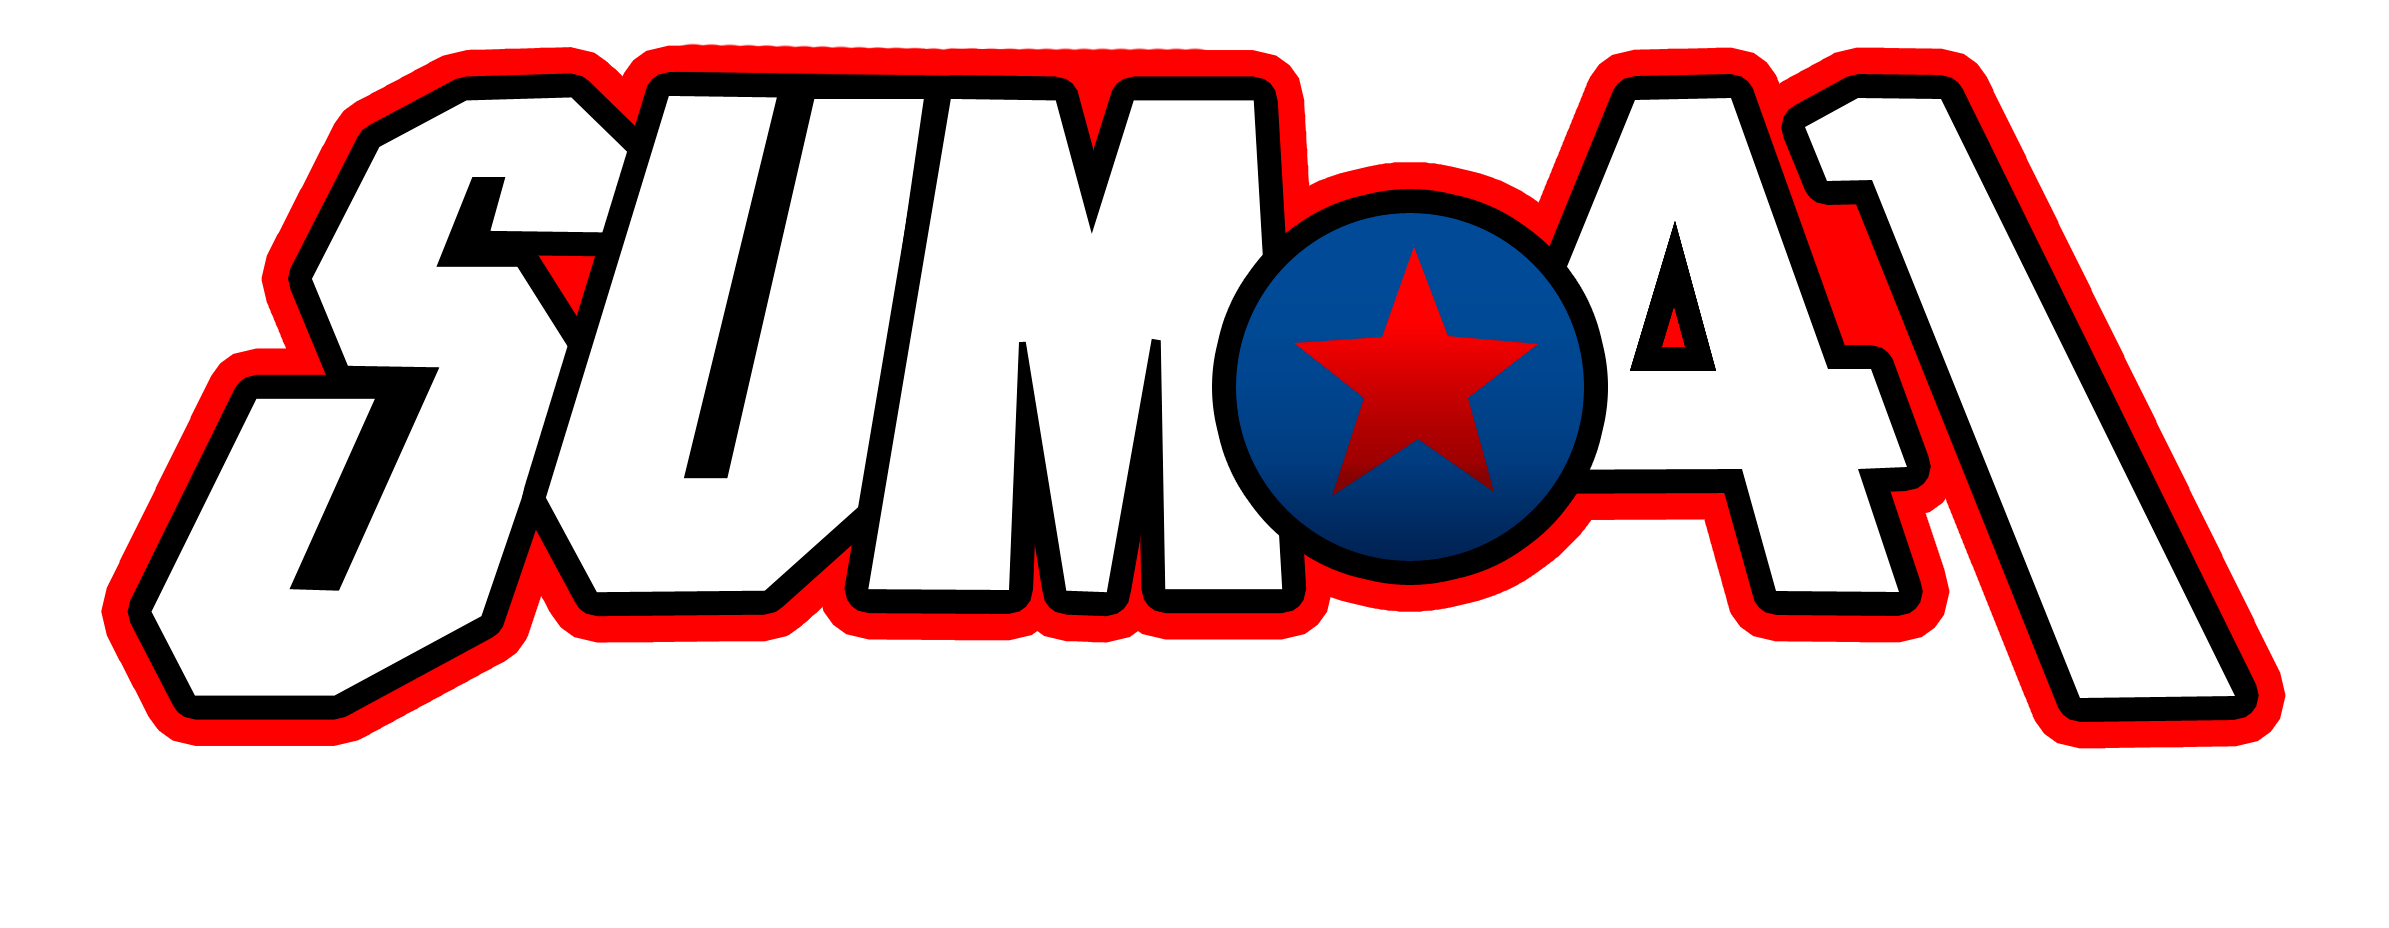 Sum 41 Logo by LuzLaura98 on DeviantArt